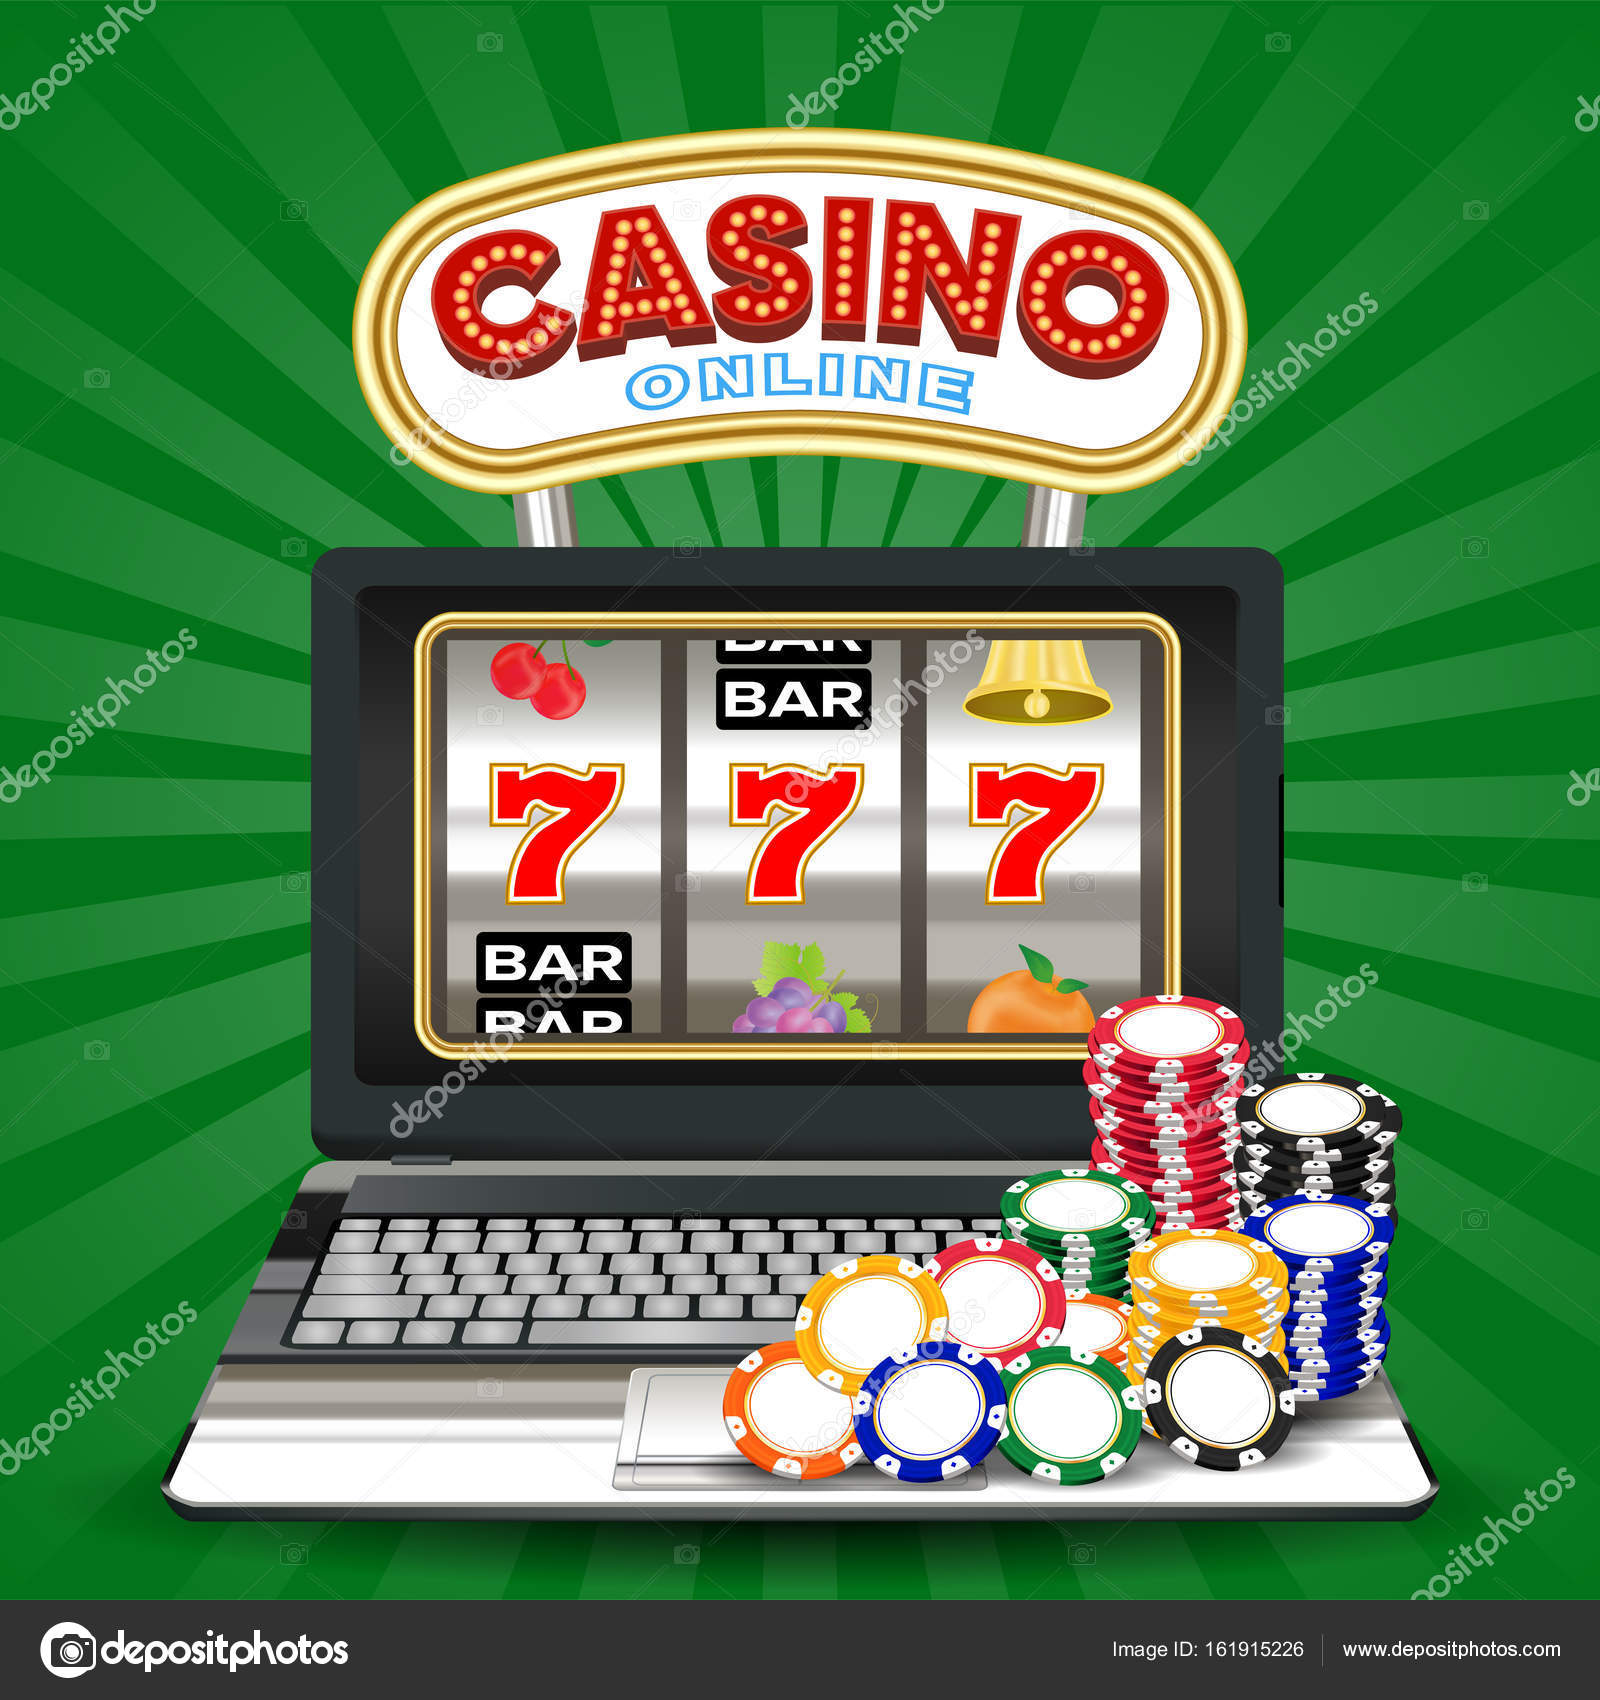 Mobile casino 888 review